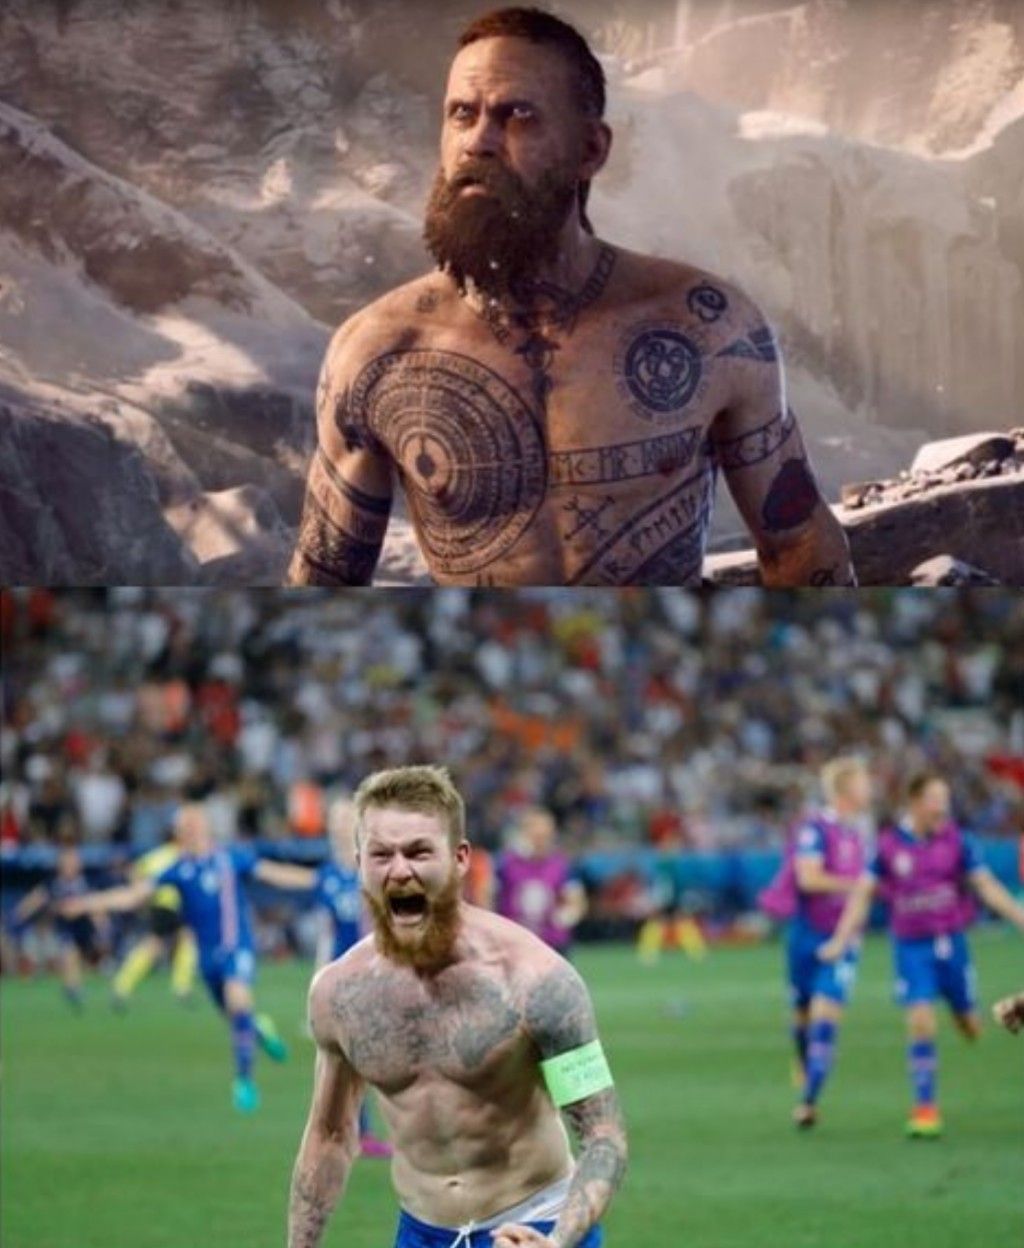 New post Icelandic player seems legit viking